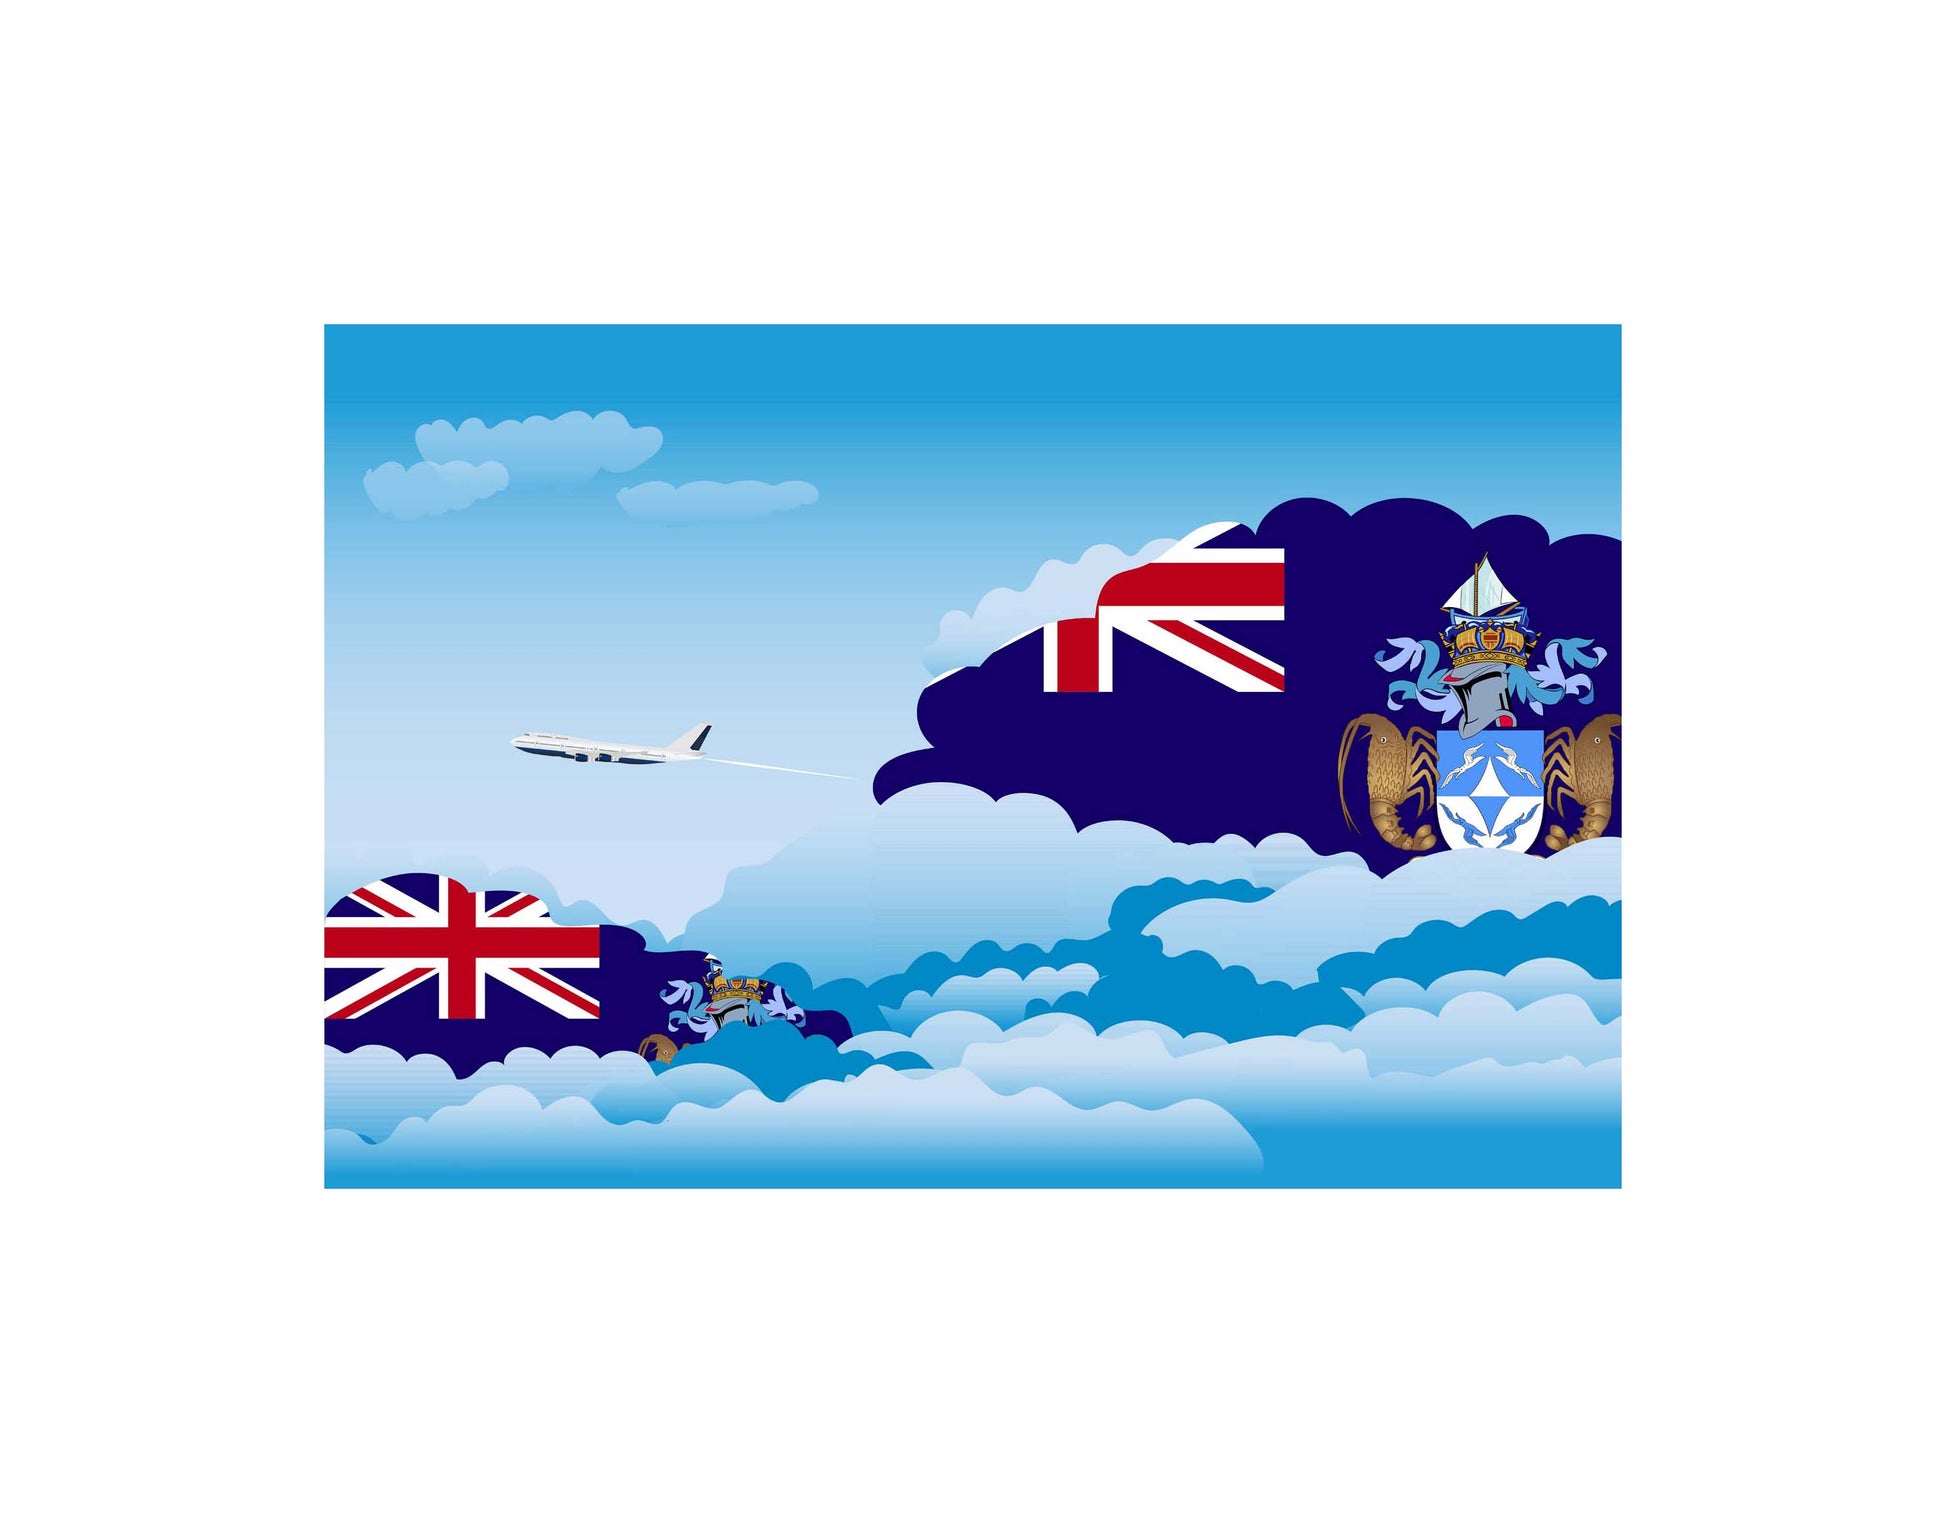 Tristan da Cunha Flag Day Clouds Aeroplane Airport Flying Vector Illustration